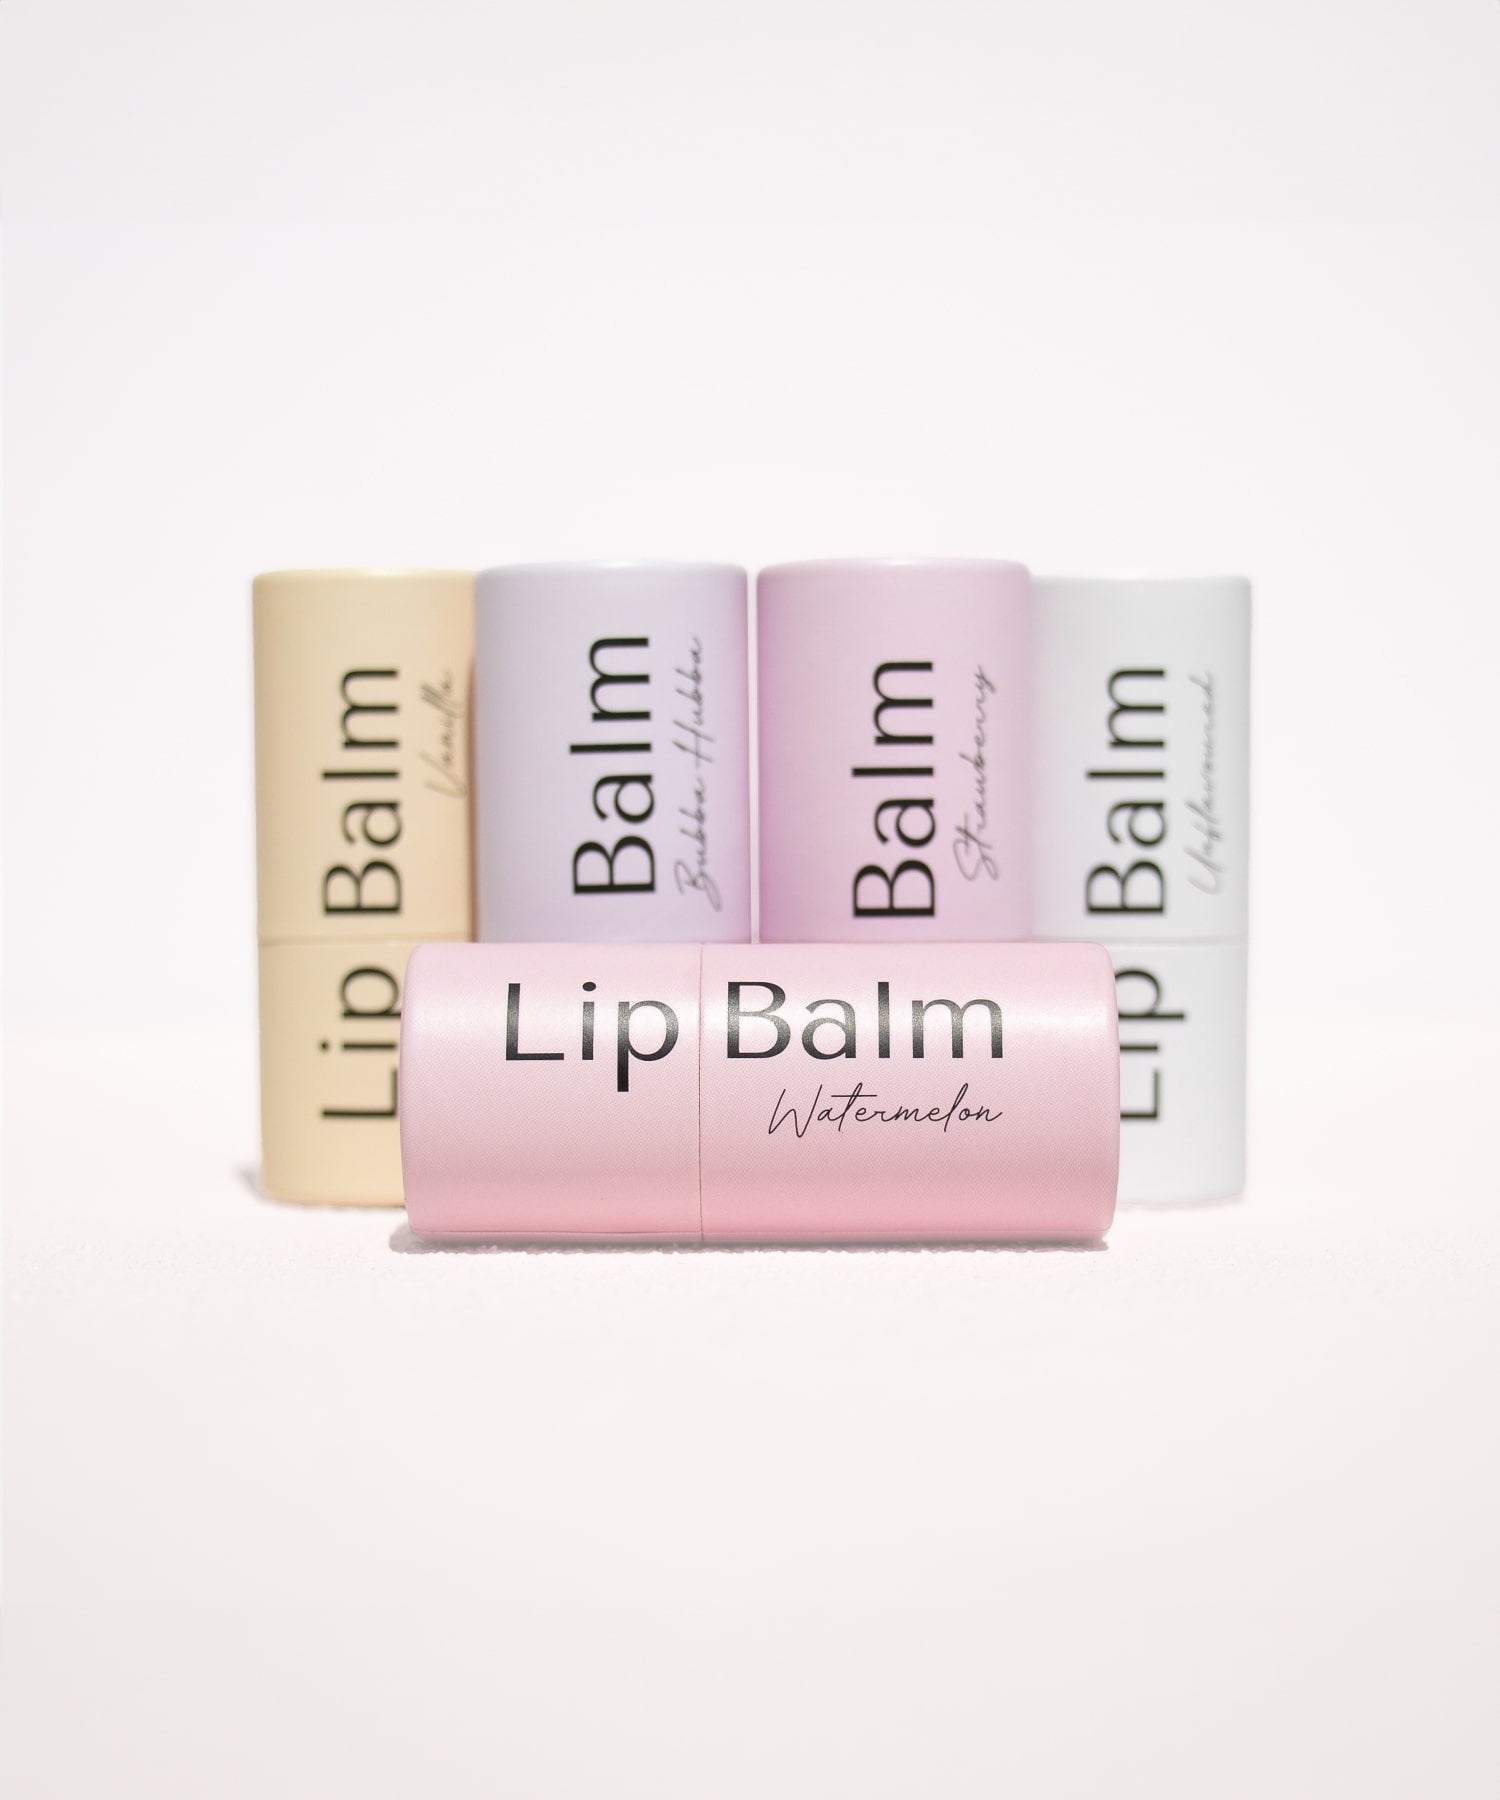 Lip Balm 5-Pack (1 FREE) - Deep Hydration